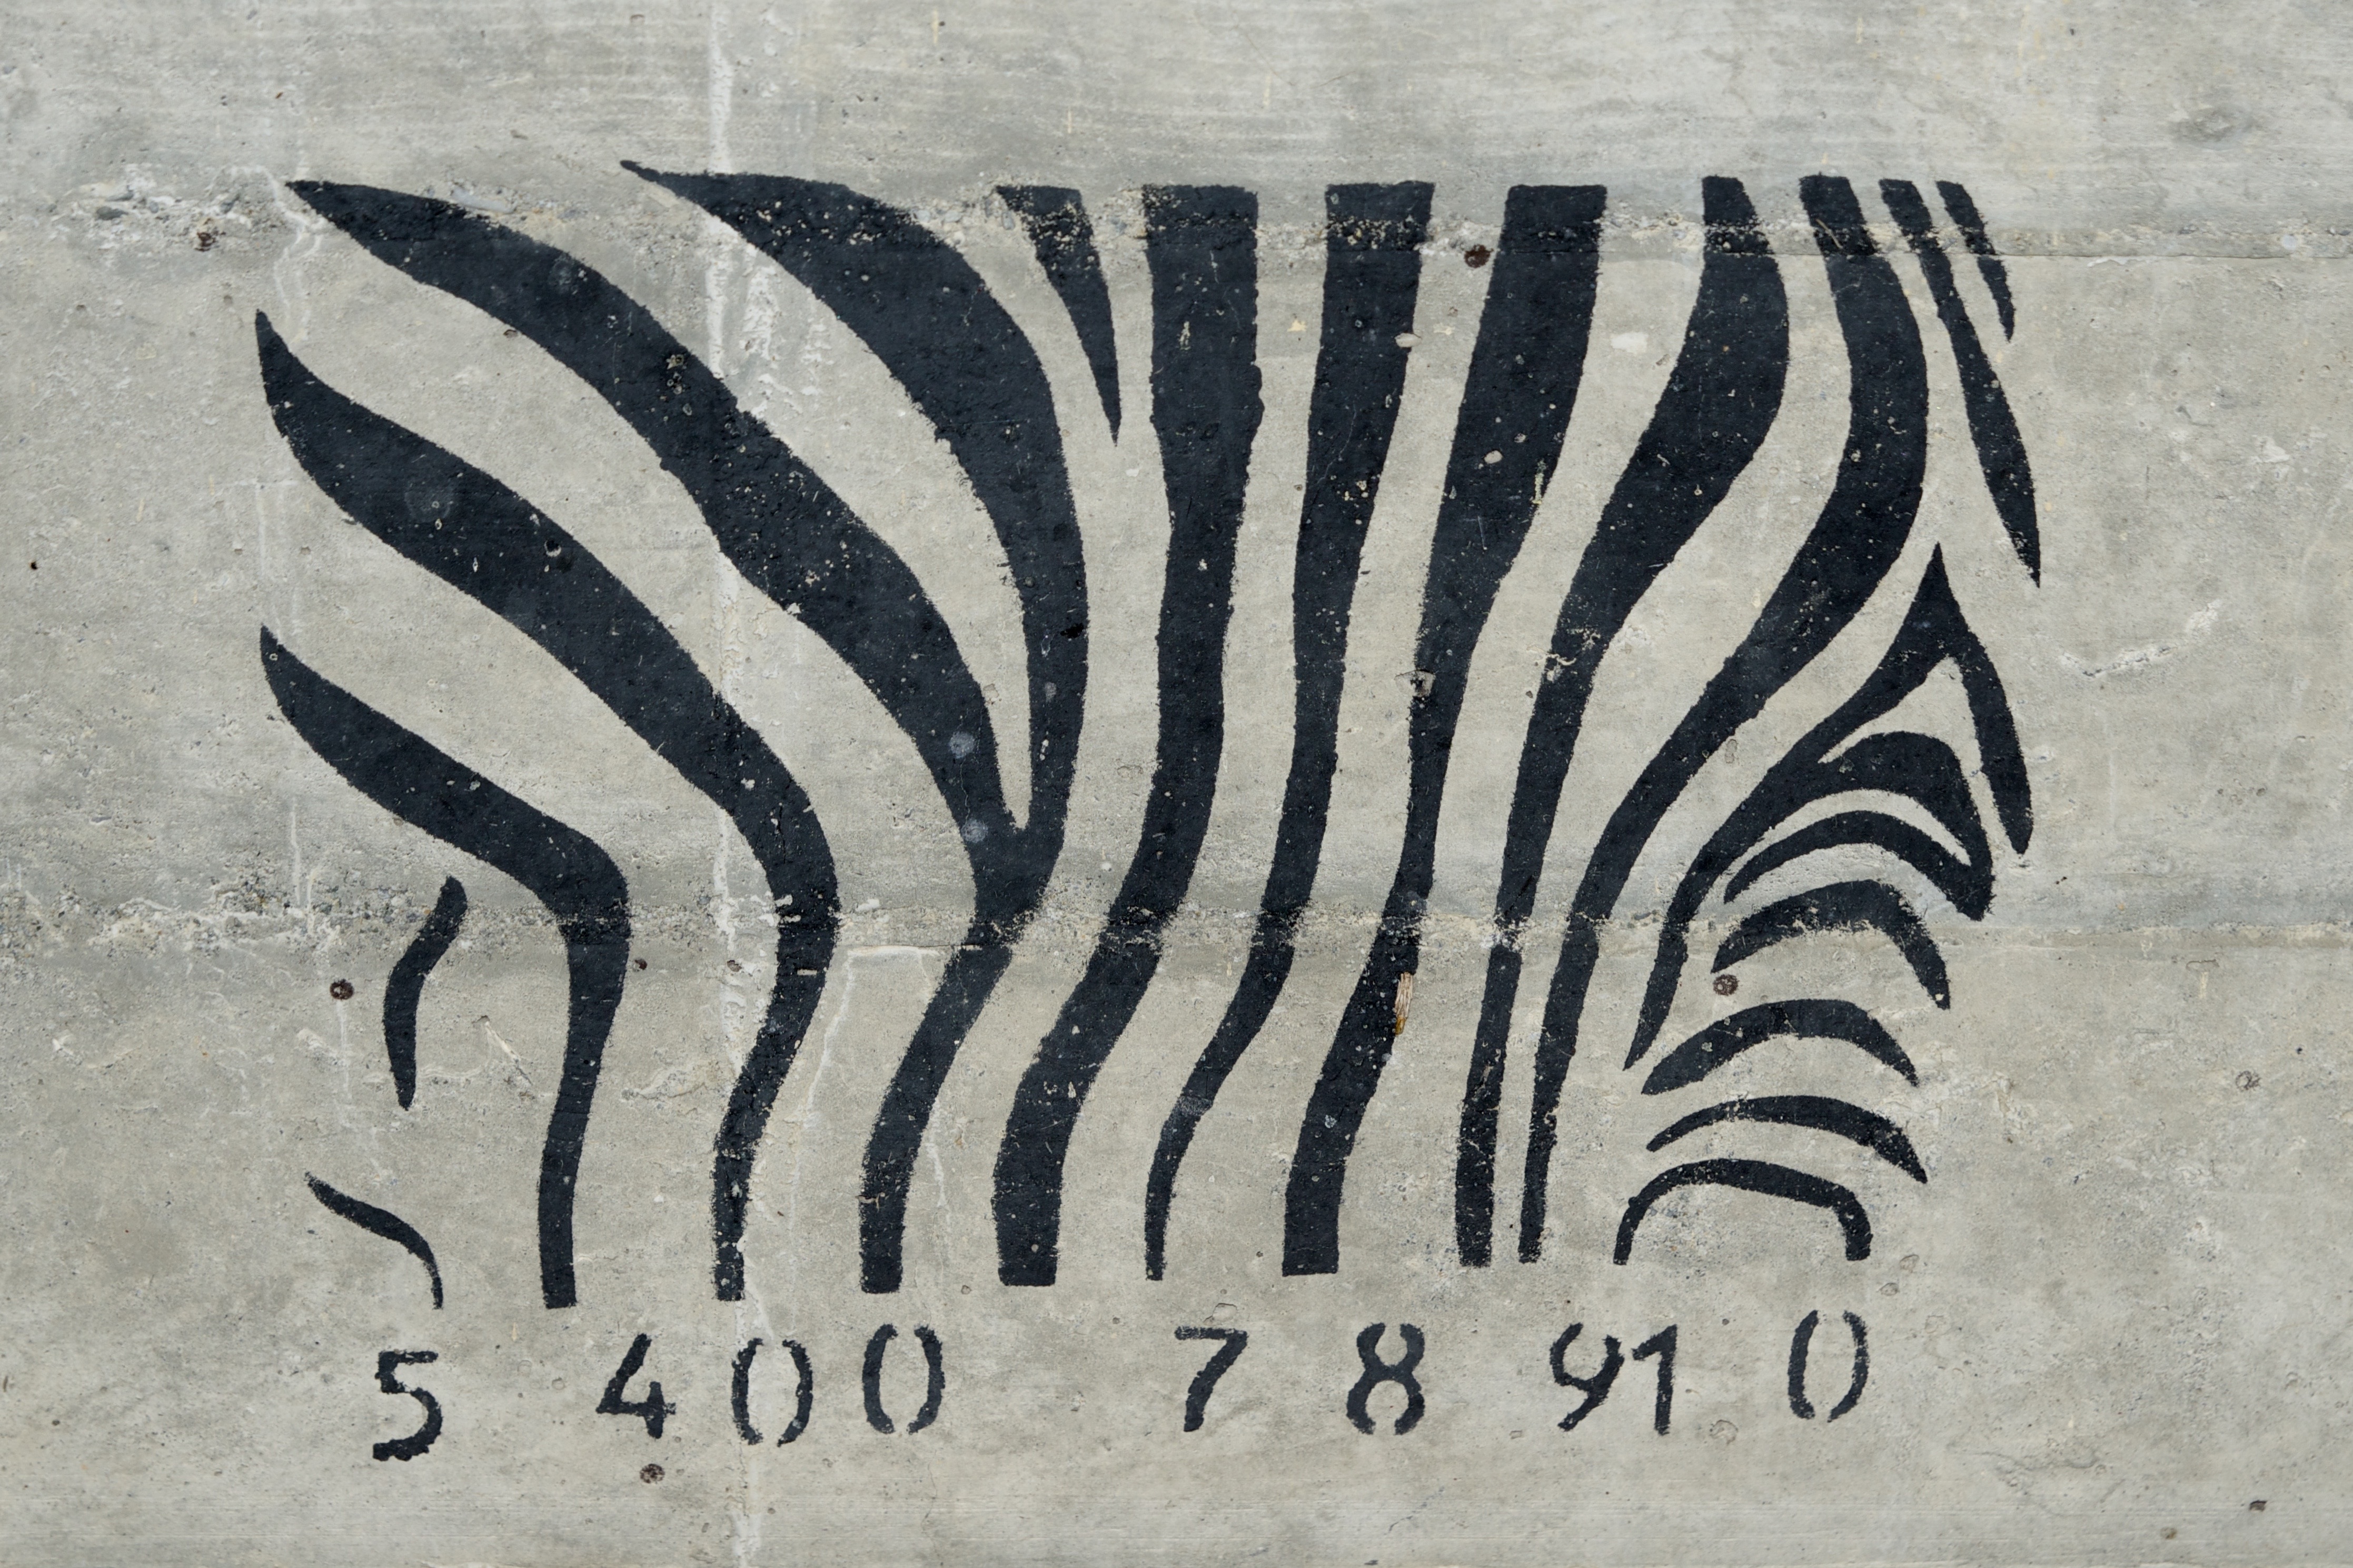 5 400 7891 0 stencil zebra art